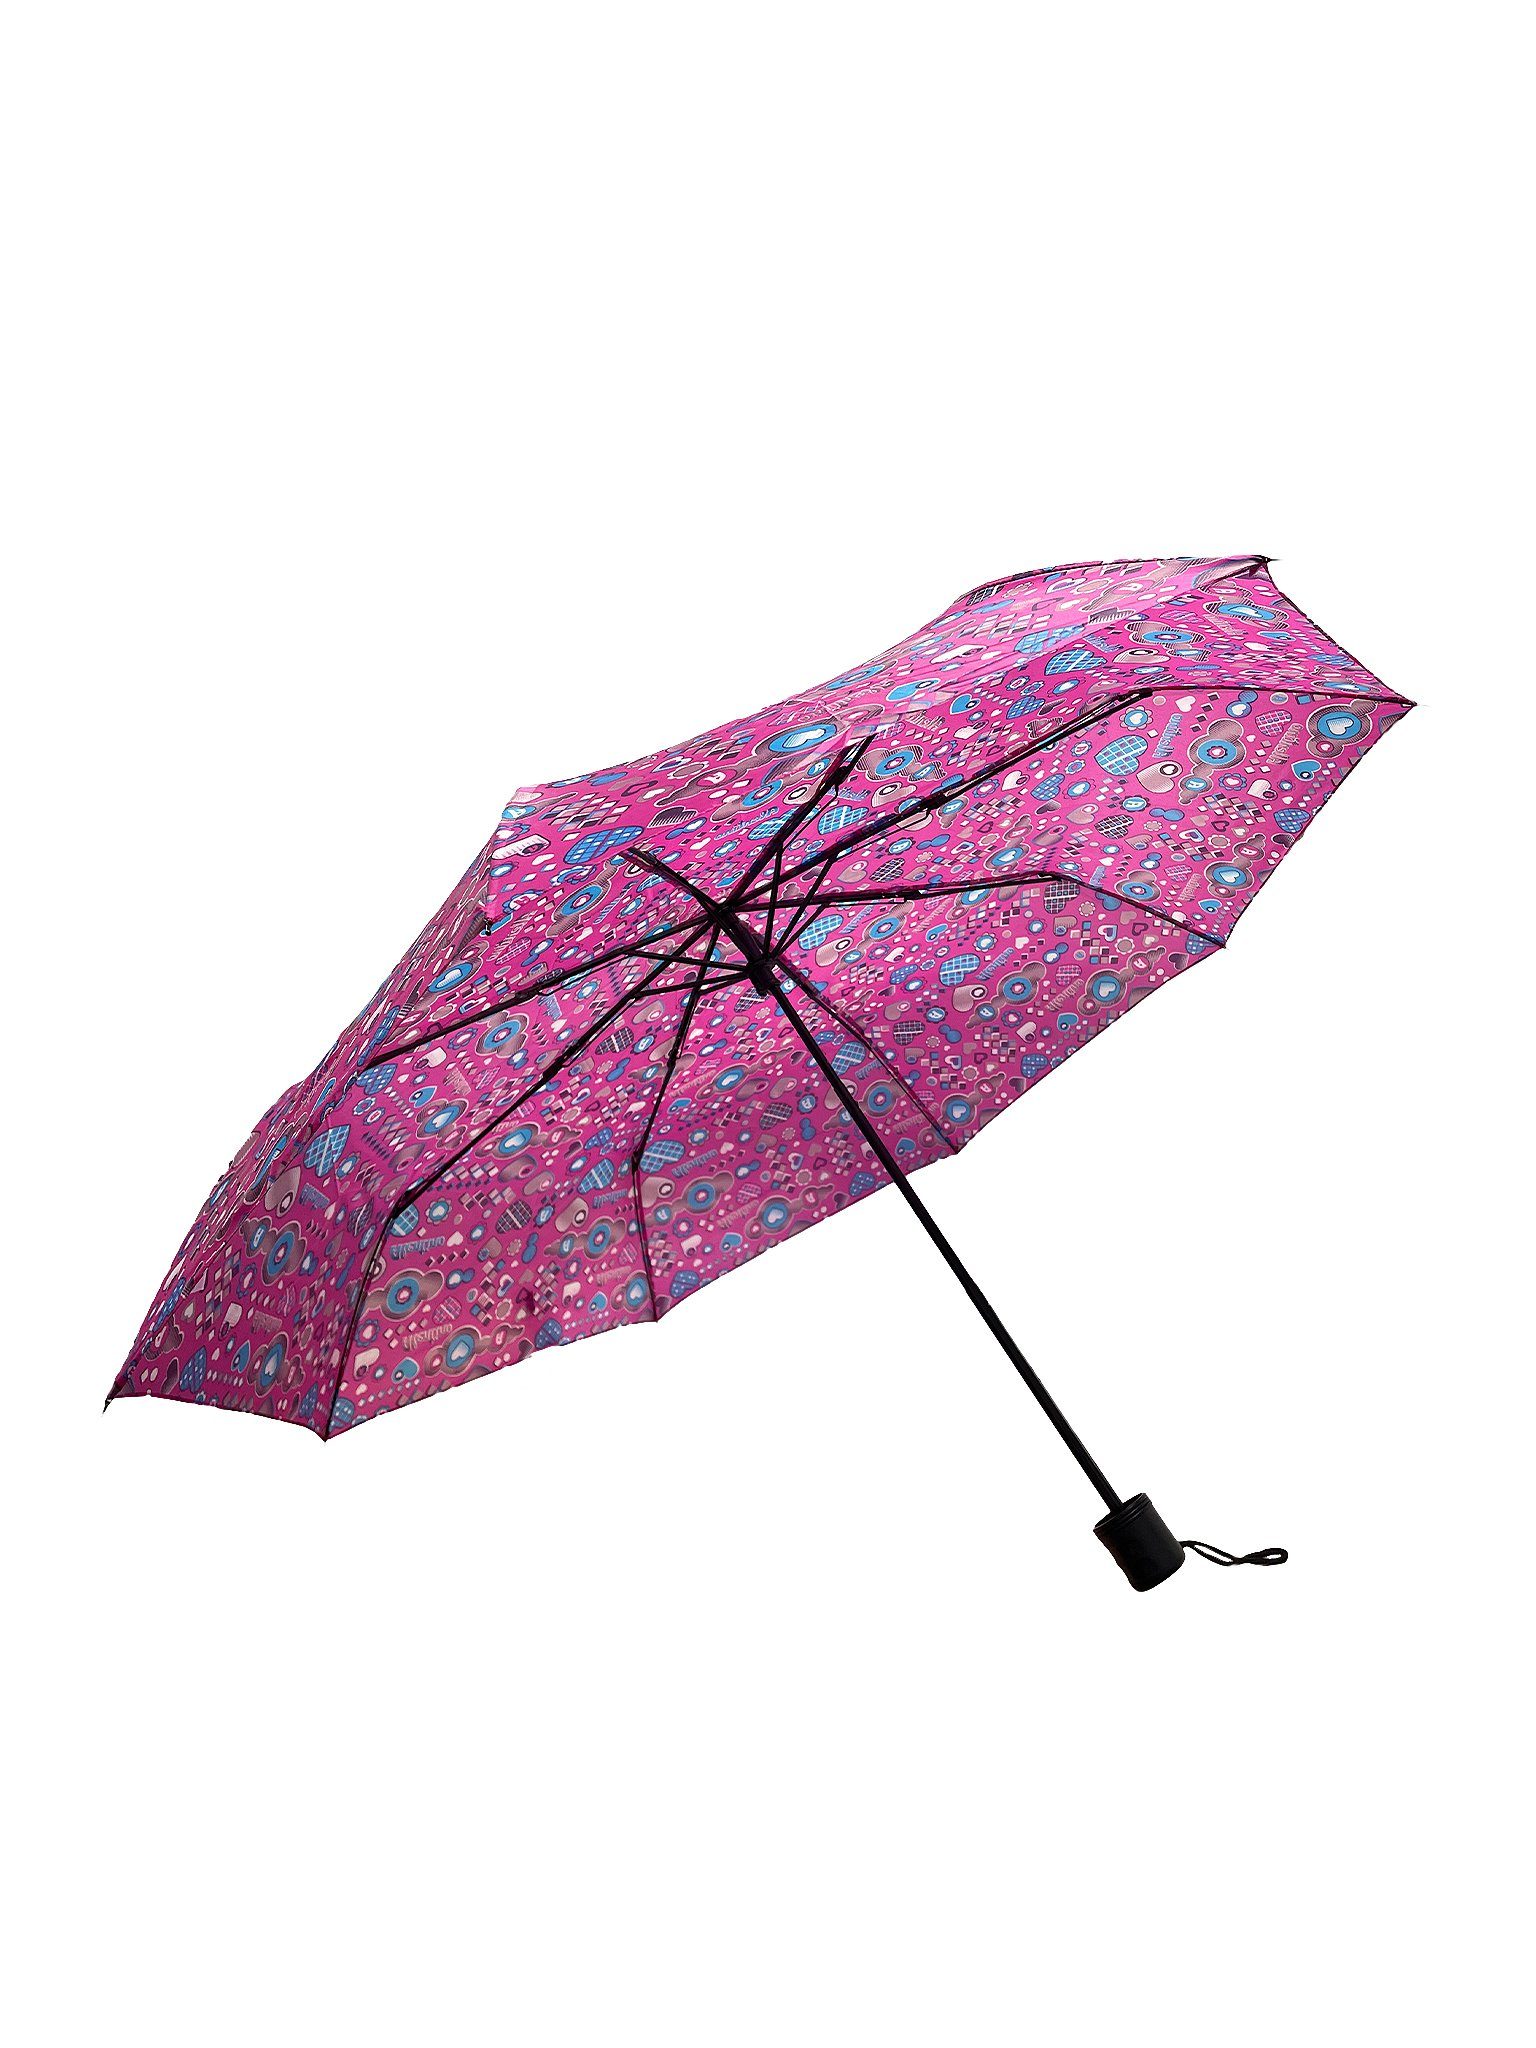 ANELY Taschenregenschirm Kleiner Regenschirm Paris Gemustert Taschenschirm, 6746 in Pink